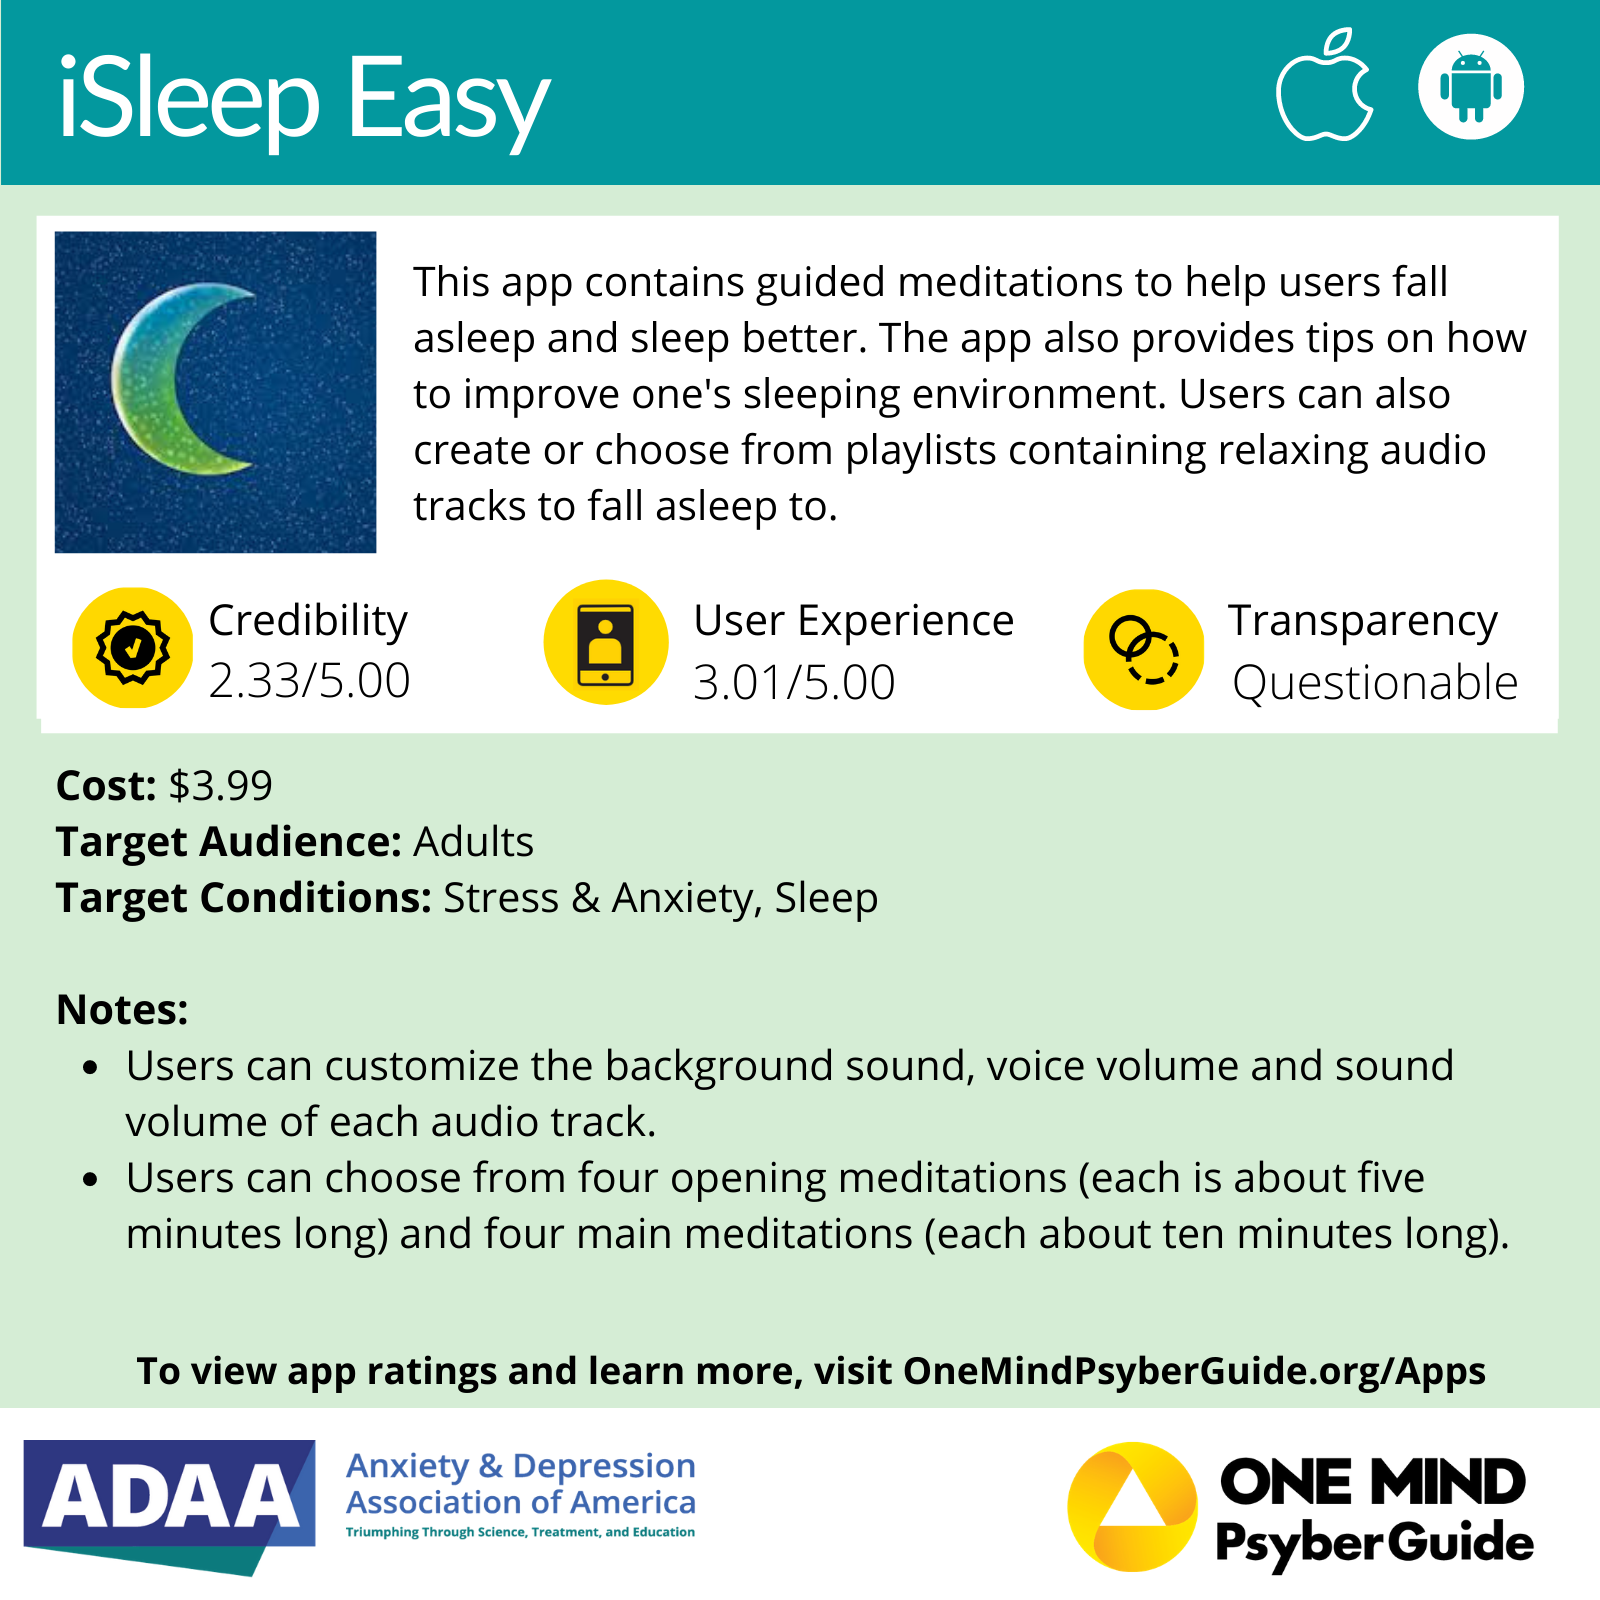 iSleep Easy app details image